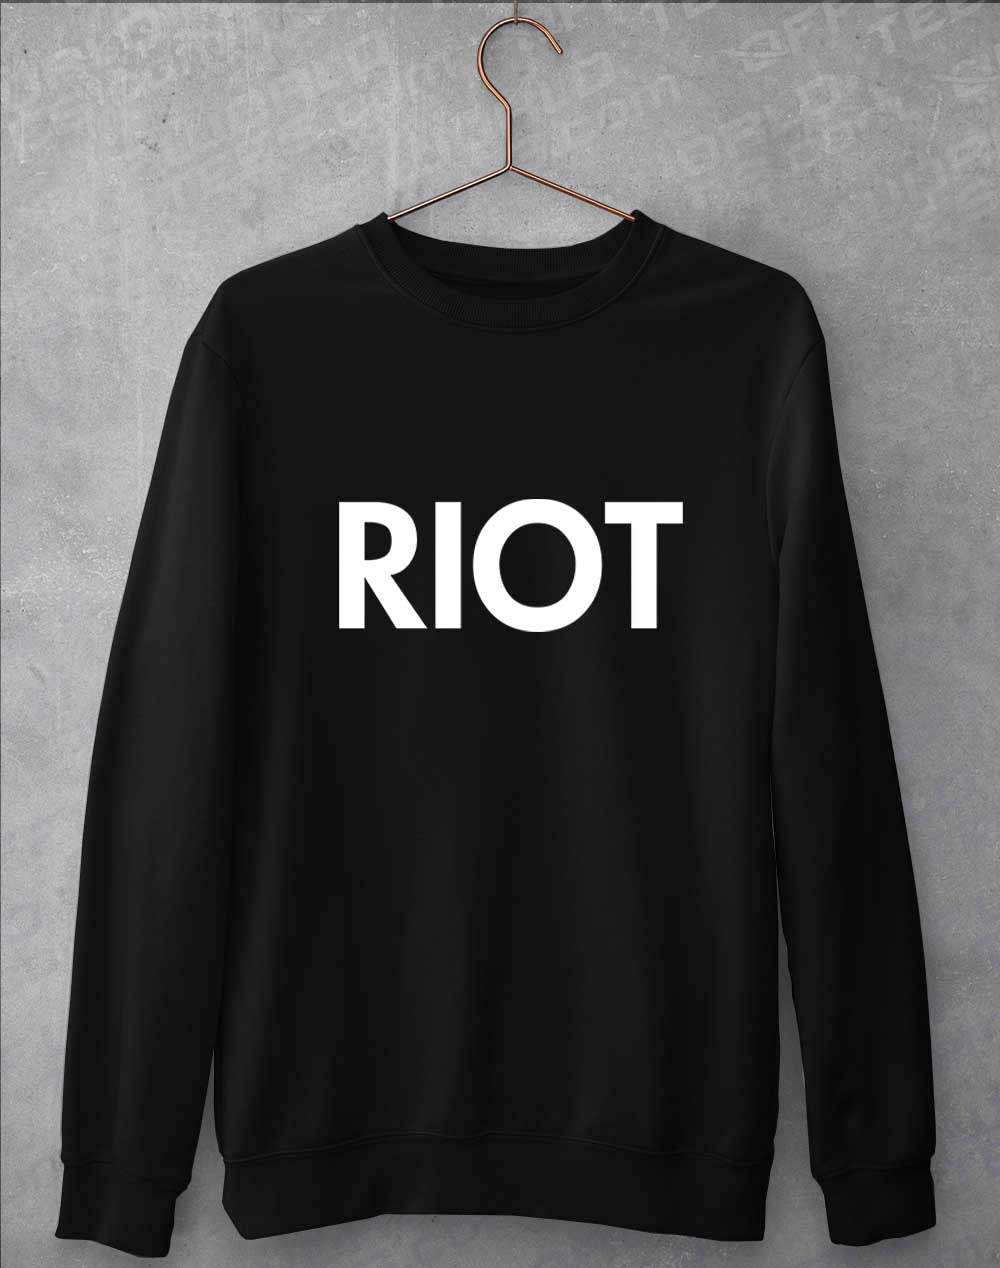 Jet Black - Mac's Riot Sweatshirt